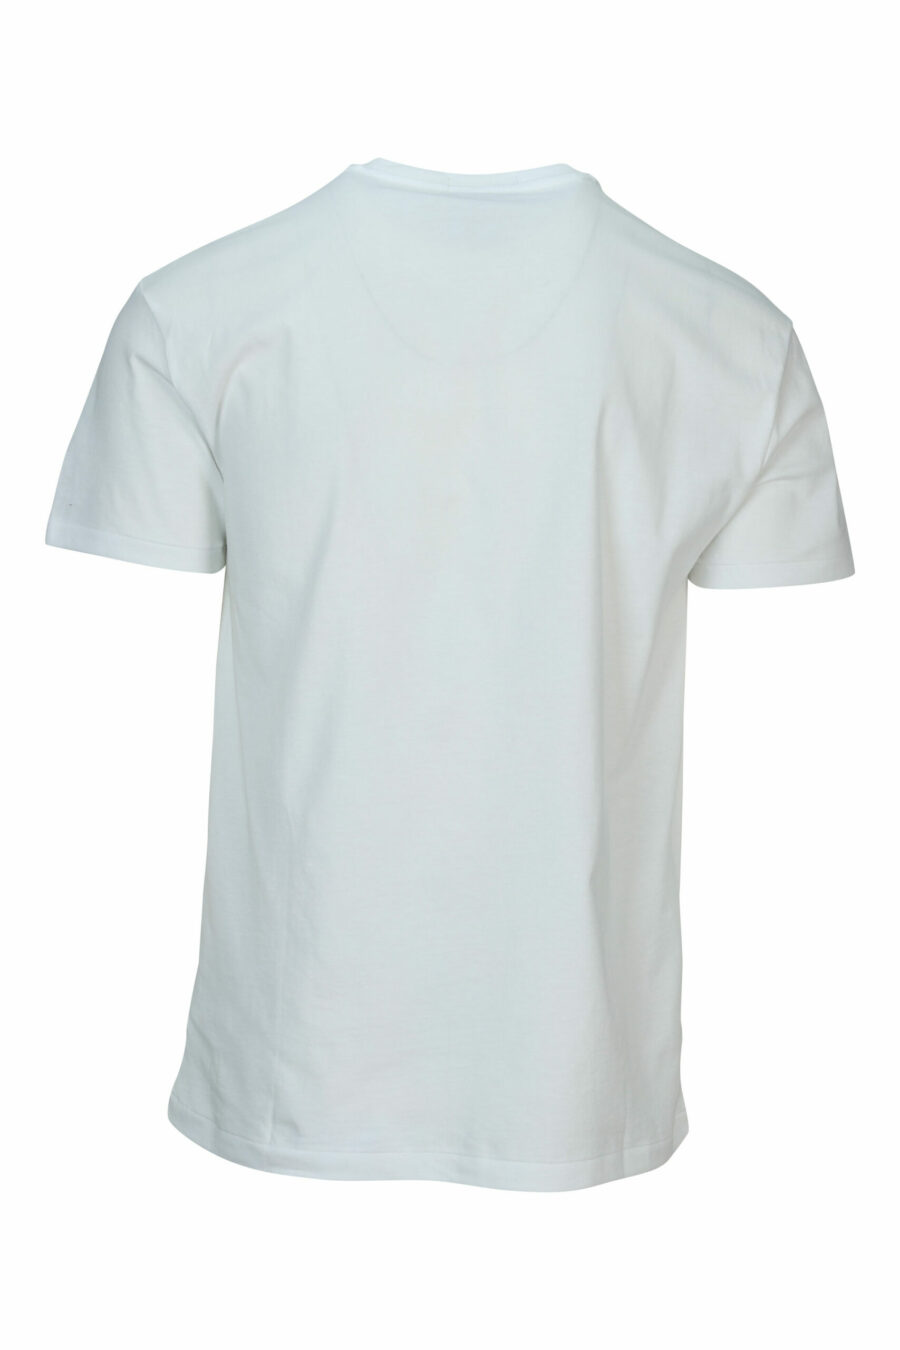 White T-shirt with maxilogo "polo bear" beachwear - 3616535843479 1 scaled